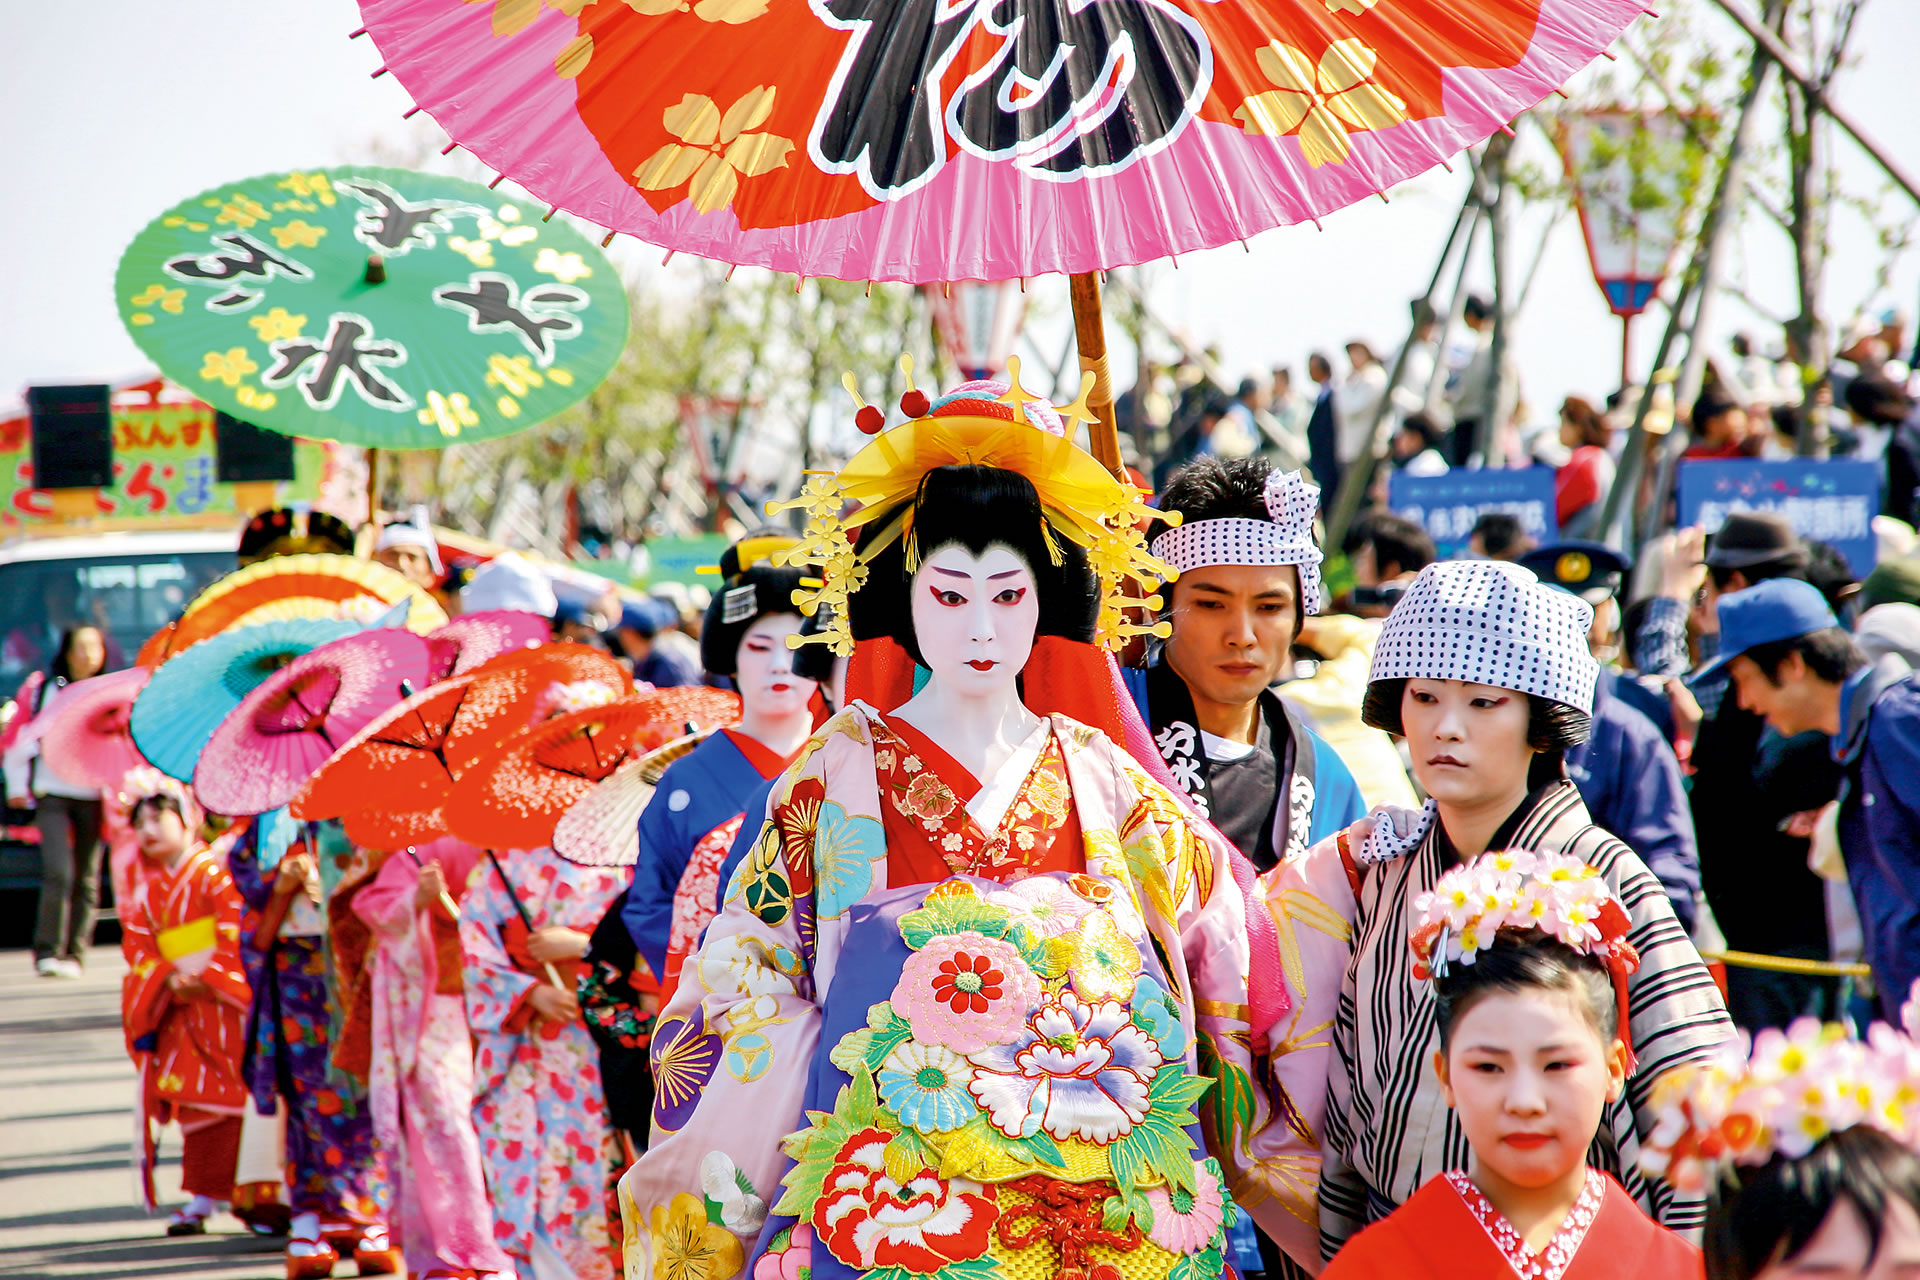 The Bunsui Kimono Parade at the Tsubame Cherry Blossom Festival